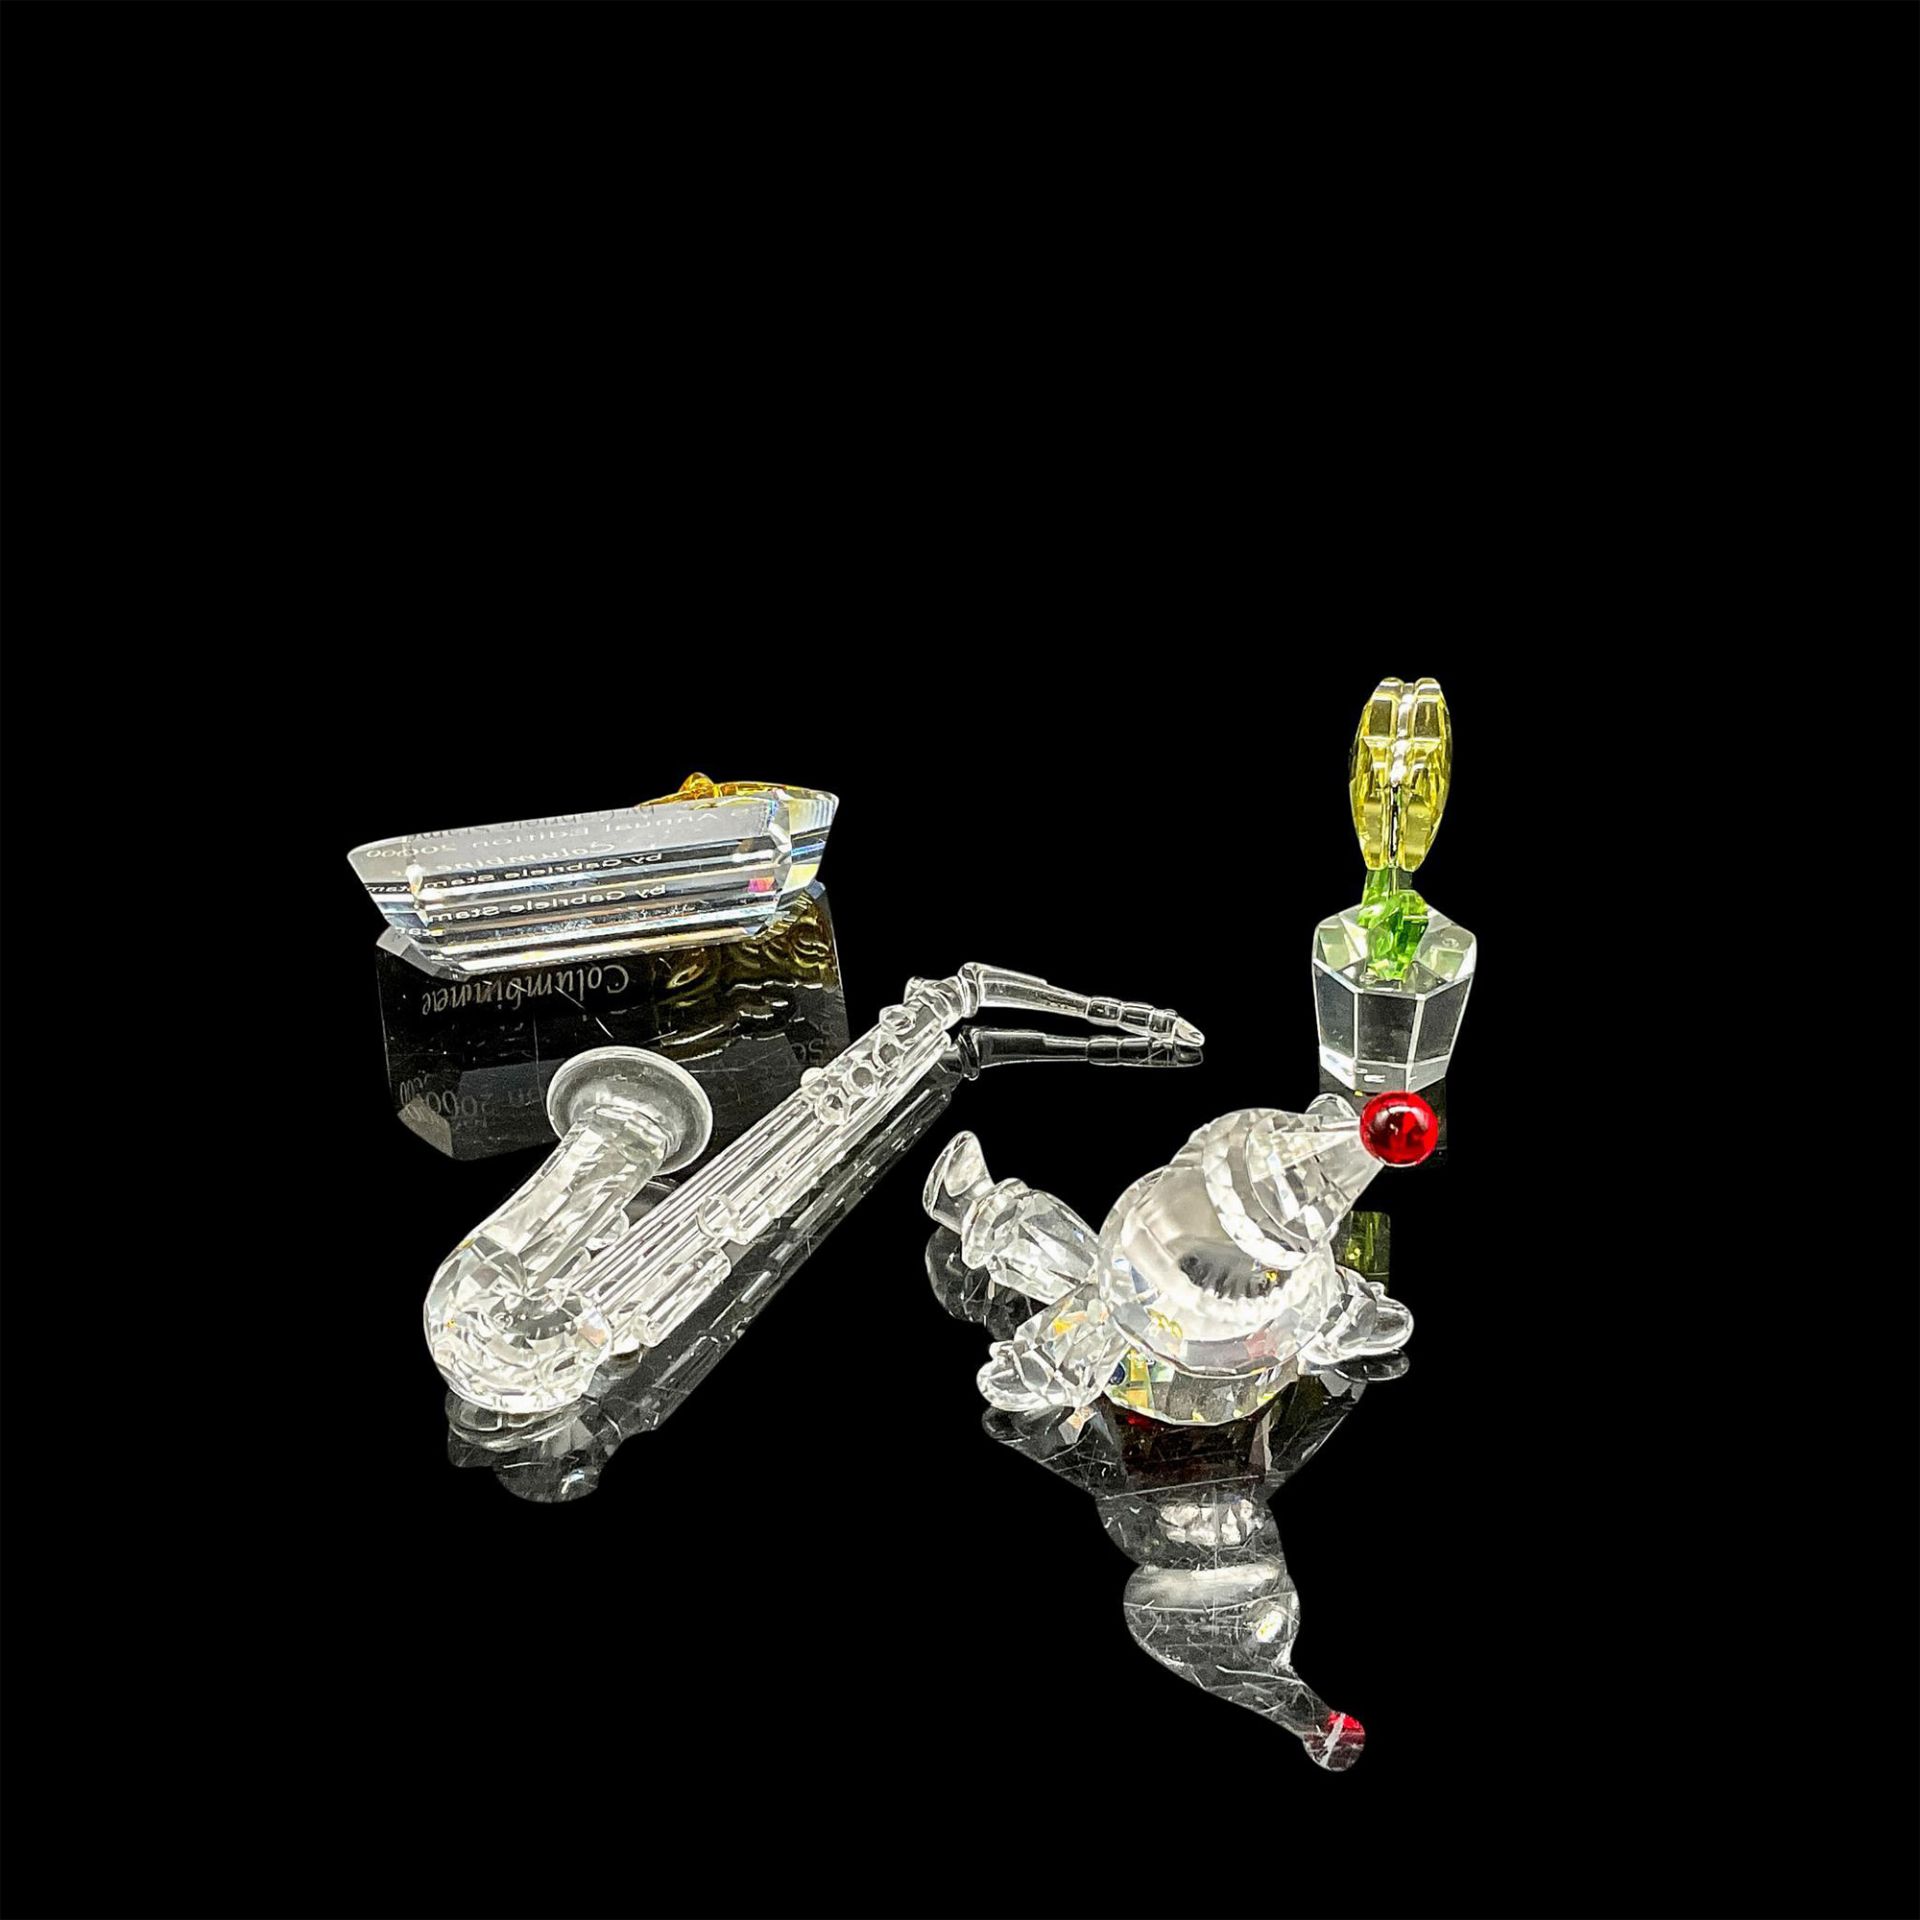 4pc Swarovski Crystal Grouping, Clown, Sax, Flower, Plaque - Image 2 of 3